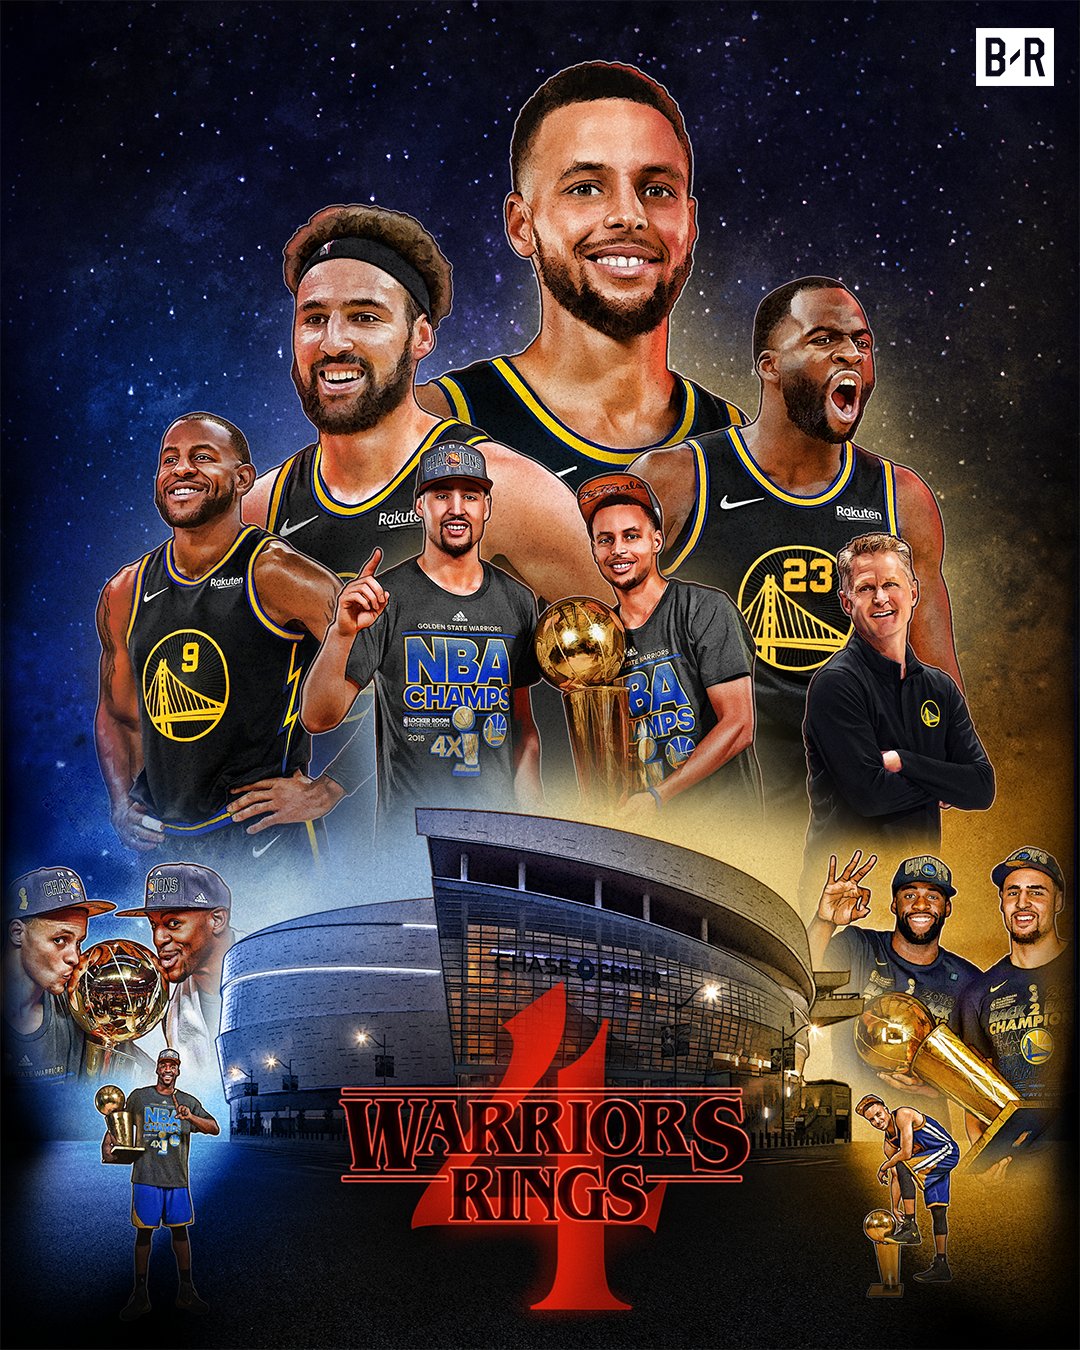 Golden State Warriors NBA Champions 2022 Wallpapers - Wallpaper Cave